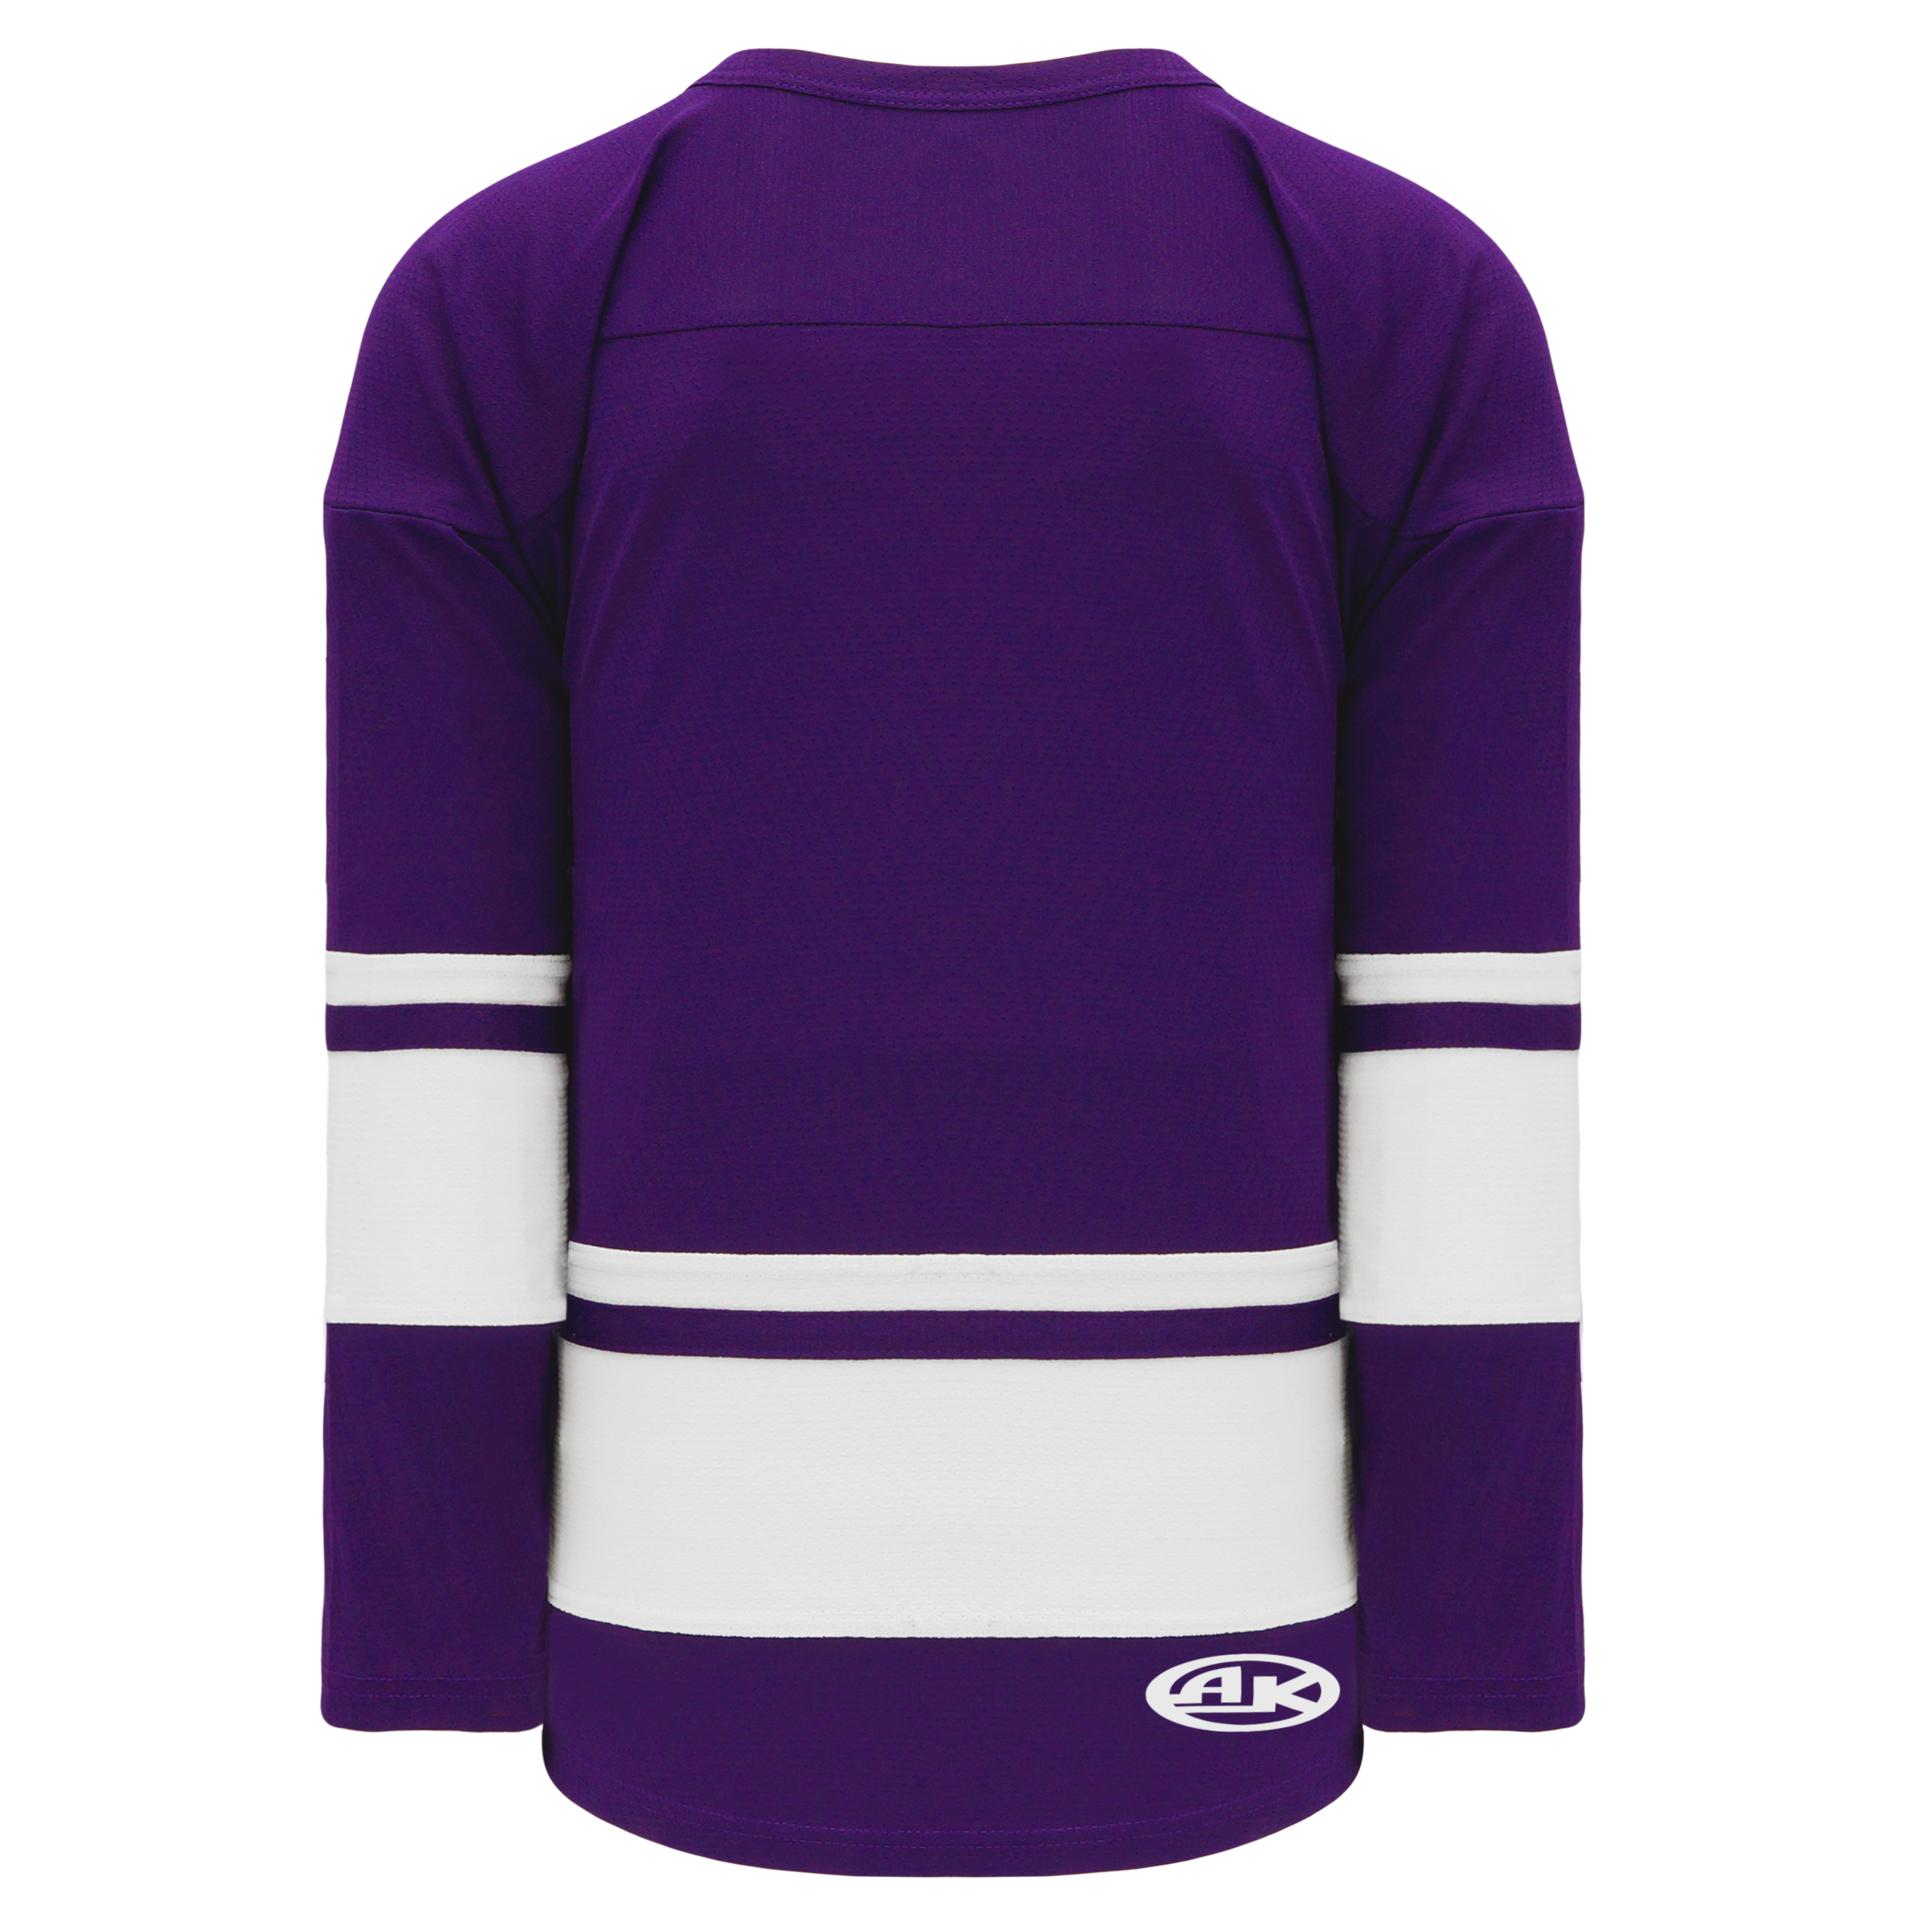 Blank Purple Hockey Jersey  Hockey jersey, Custom hockey jerseys, Jersey